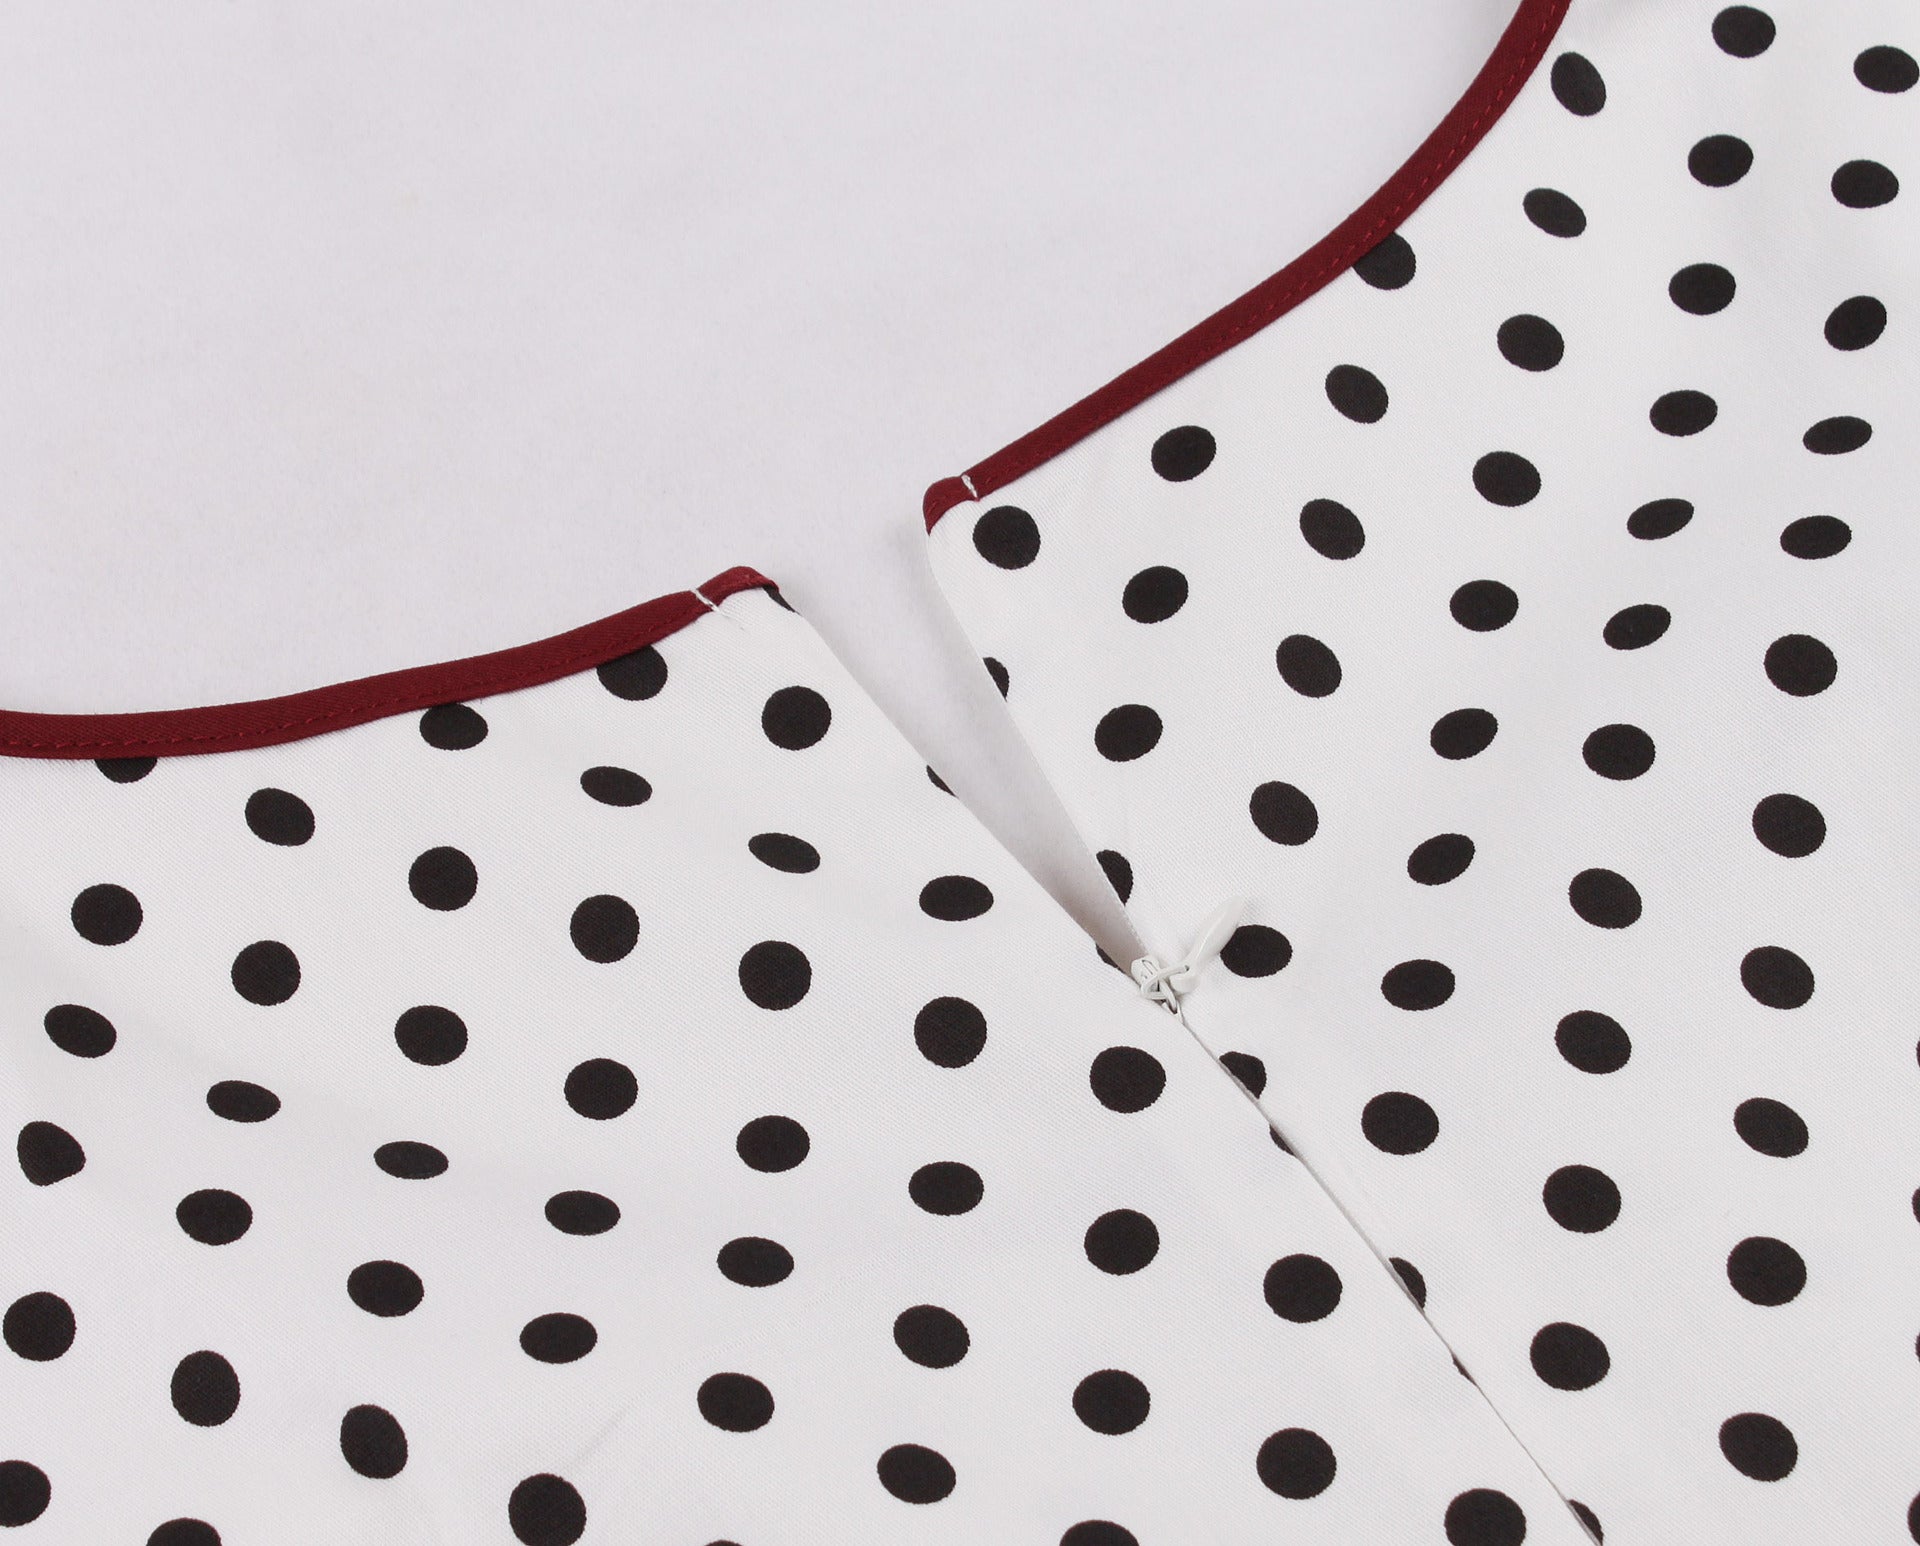 French Style Vintage Swing White Tunic Short Sleeve Cotton Polka Dot Print Rockabilly Flare Dress